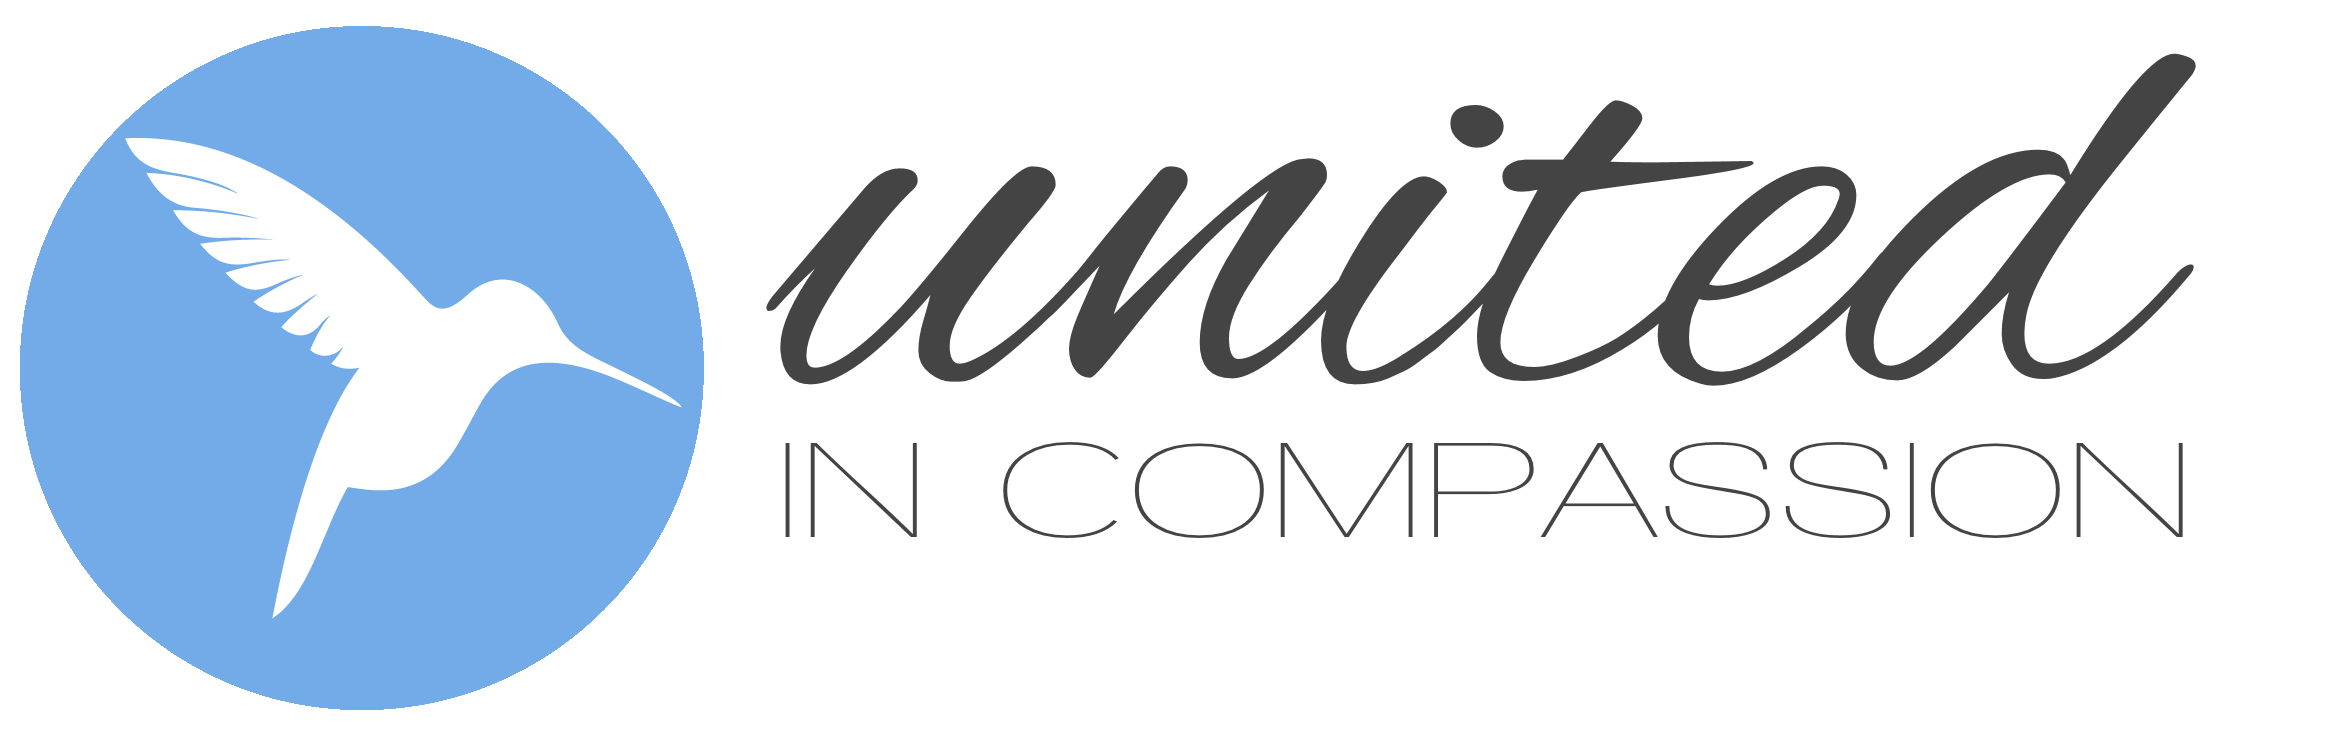 United In Compassion logo